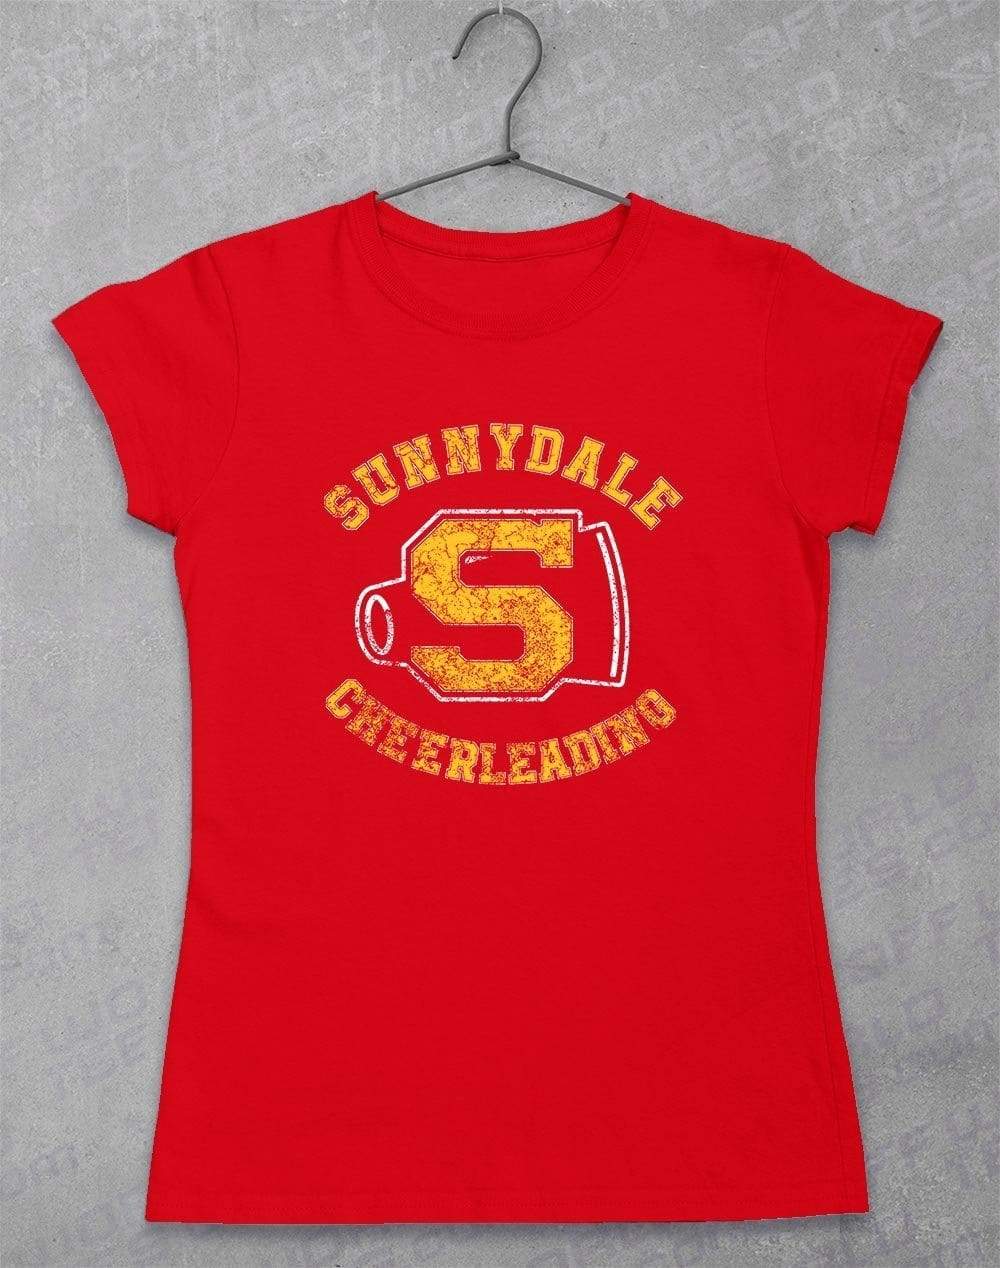 Sunnydale Cheerleading Women's T-Shirt 8-10 / Red  - Off World Tees